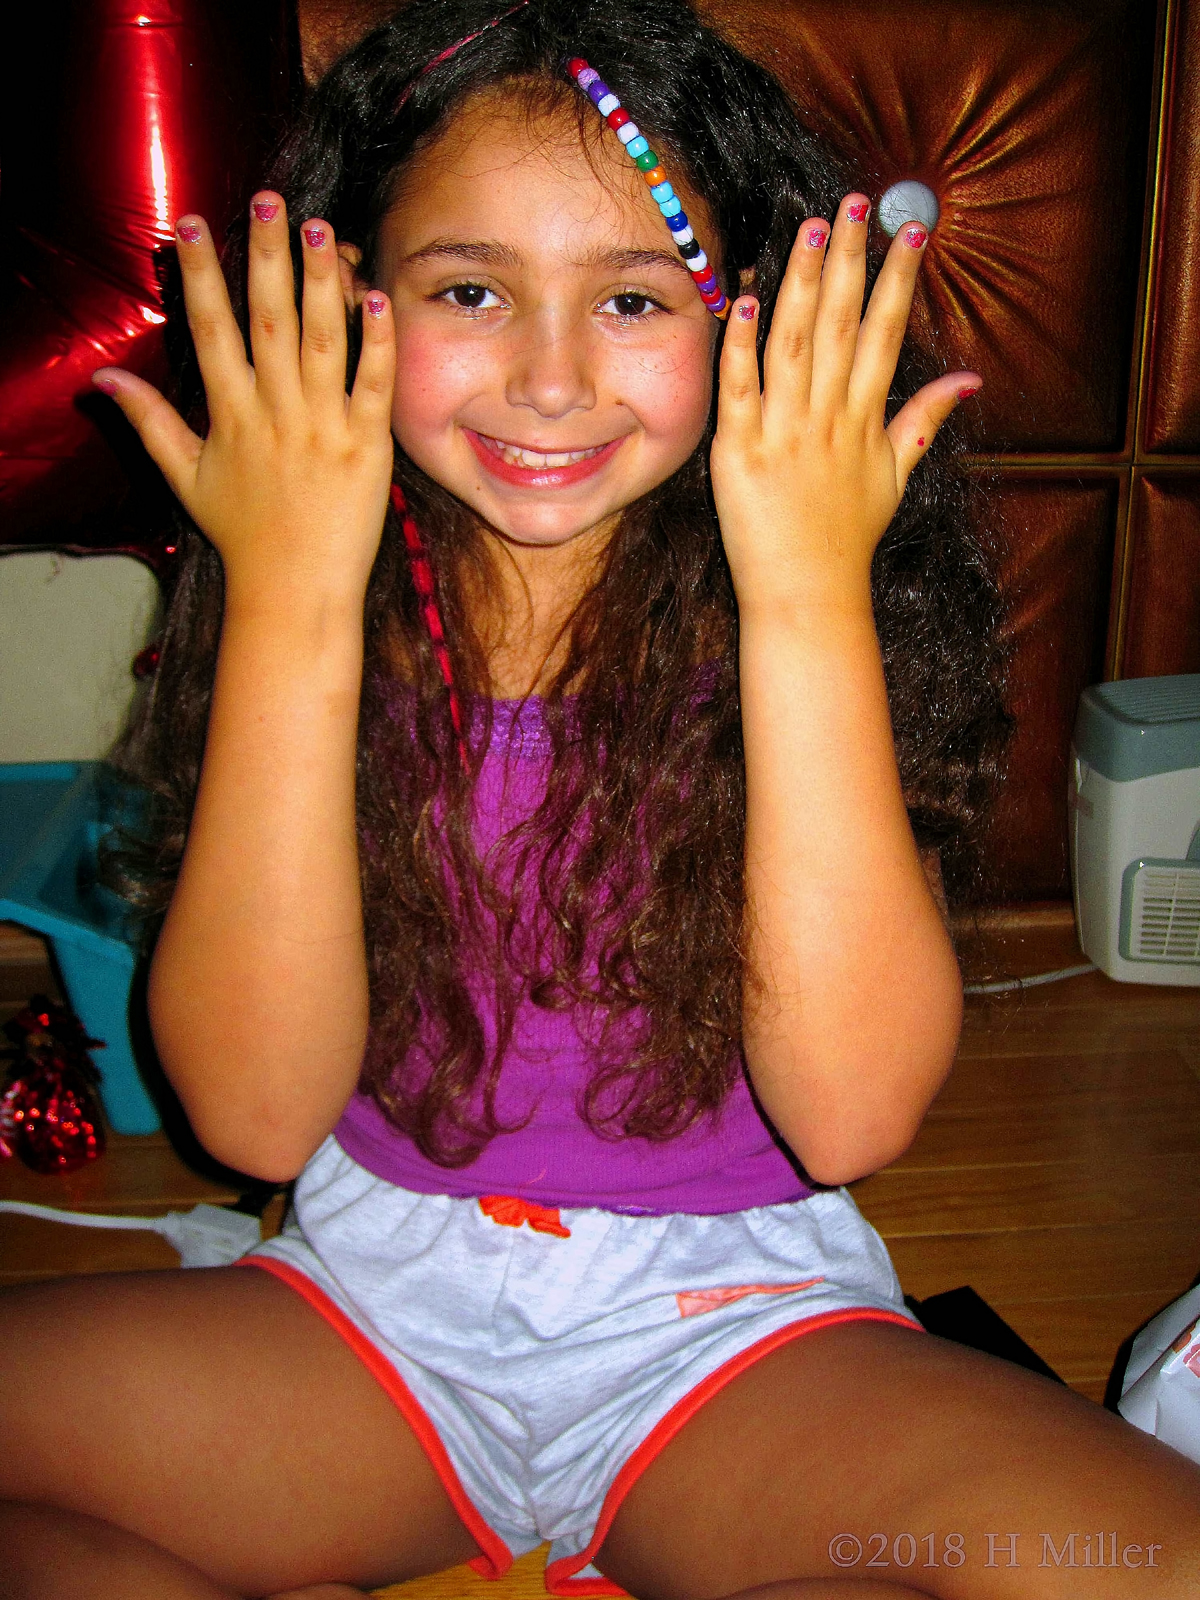 Birthday Girl Shows Off Her Glittery Kids Manicure.